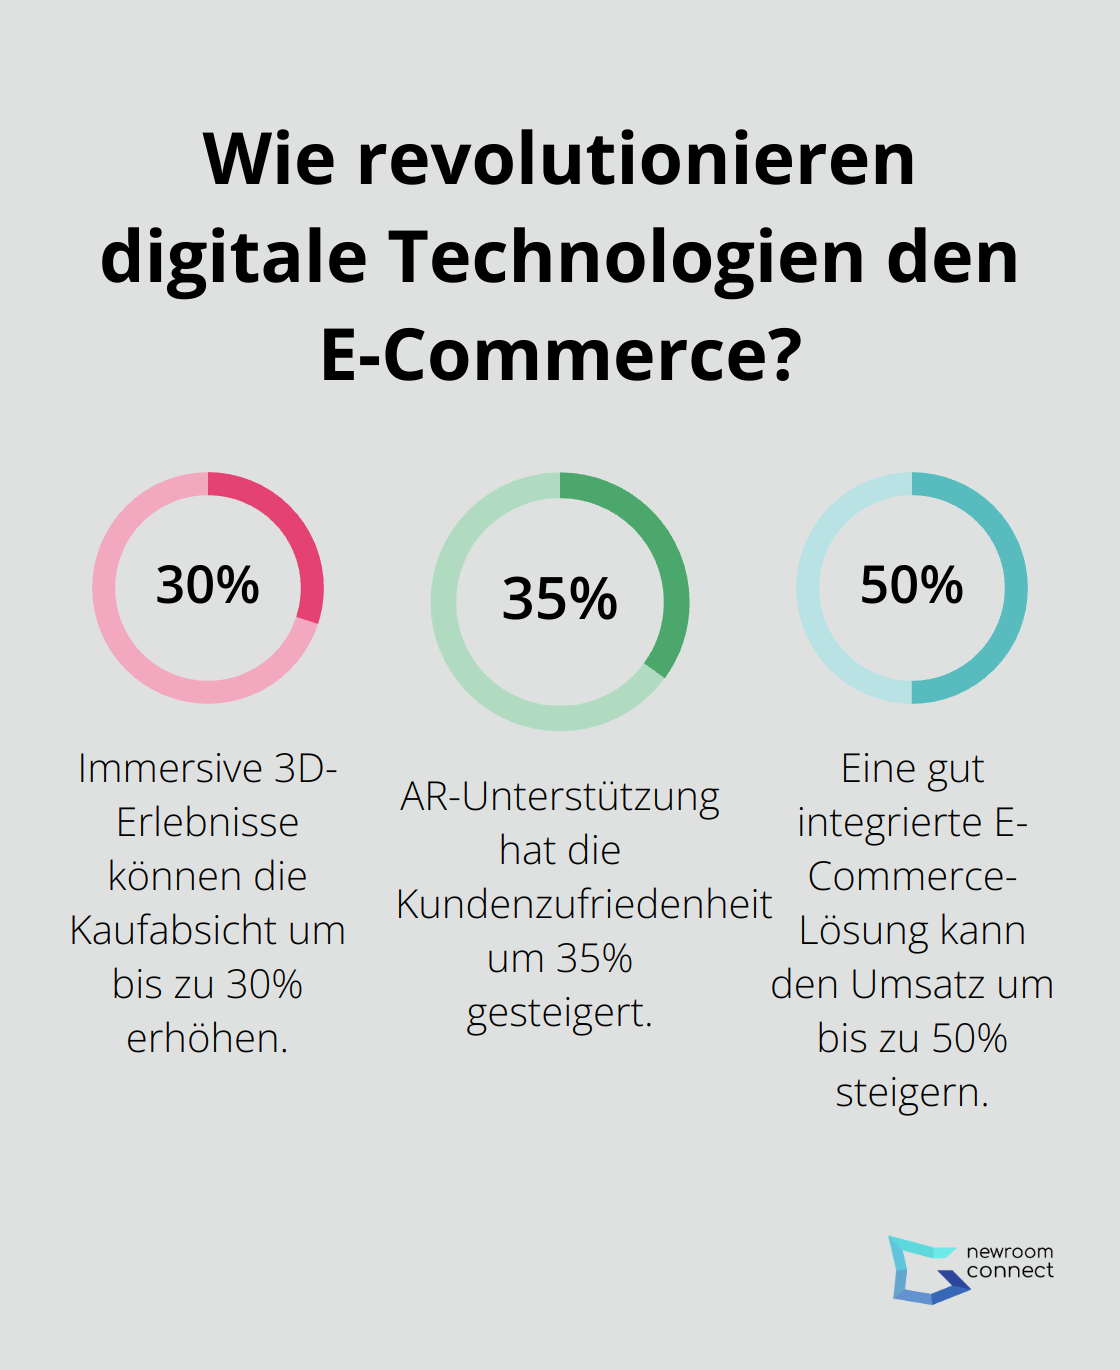 Fact - Wie revolutionieren digitale Technologien den E-Commerce?